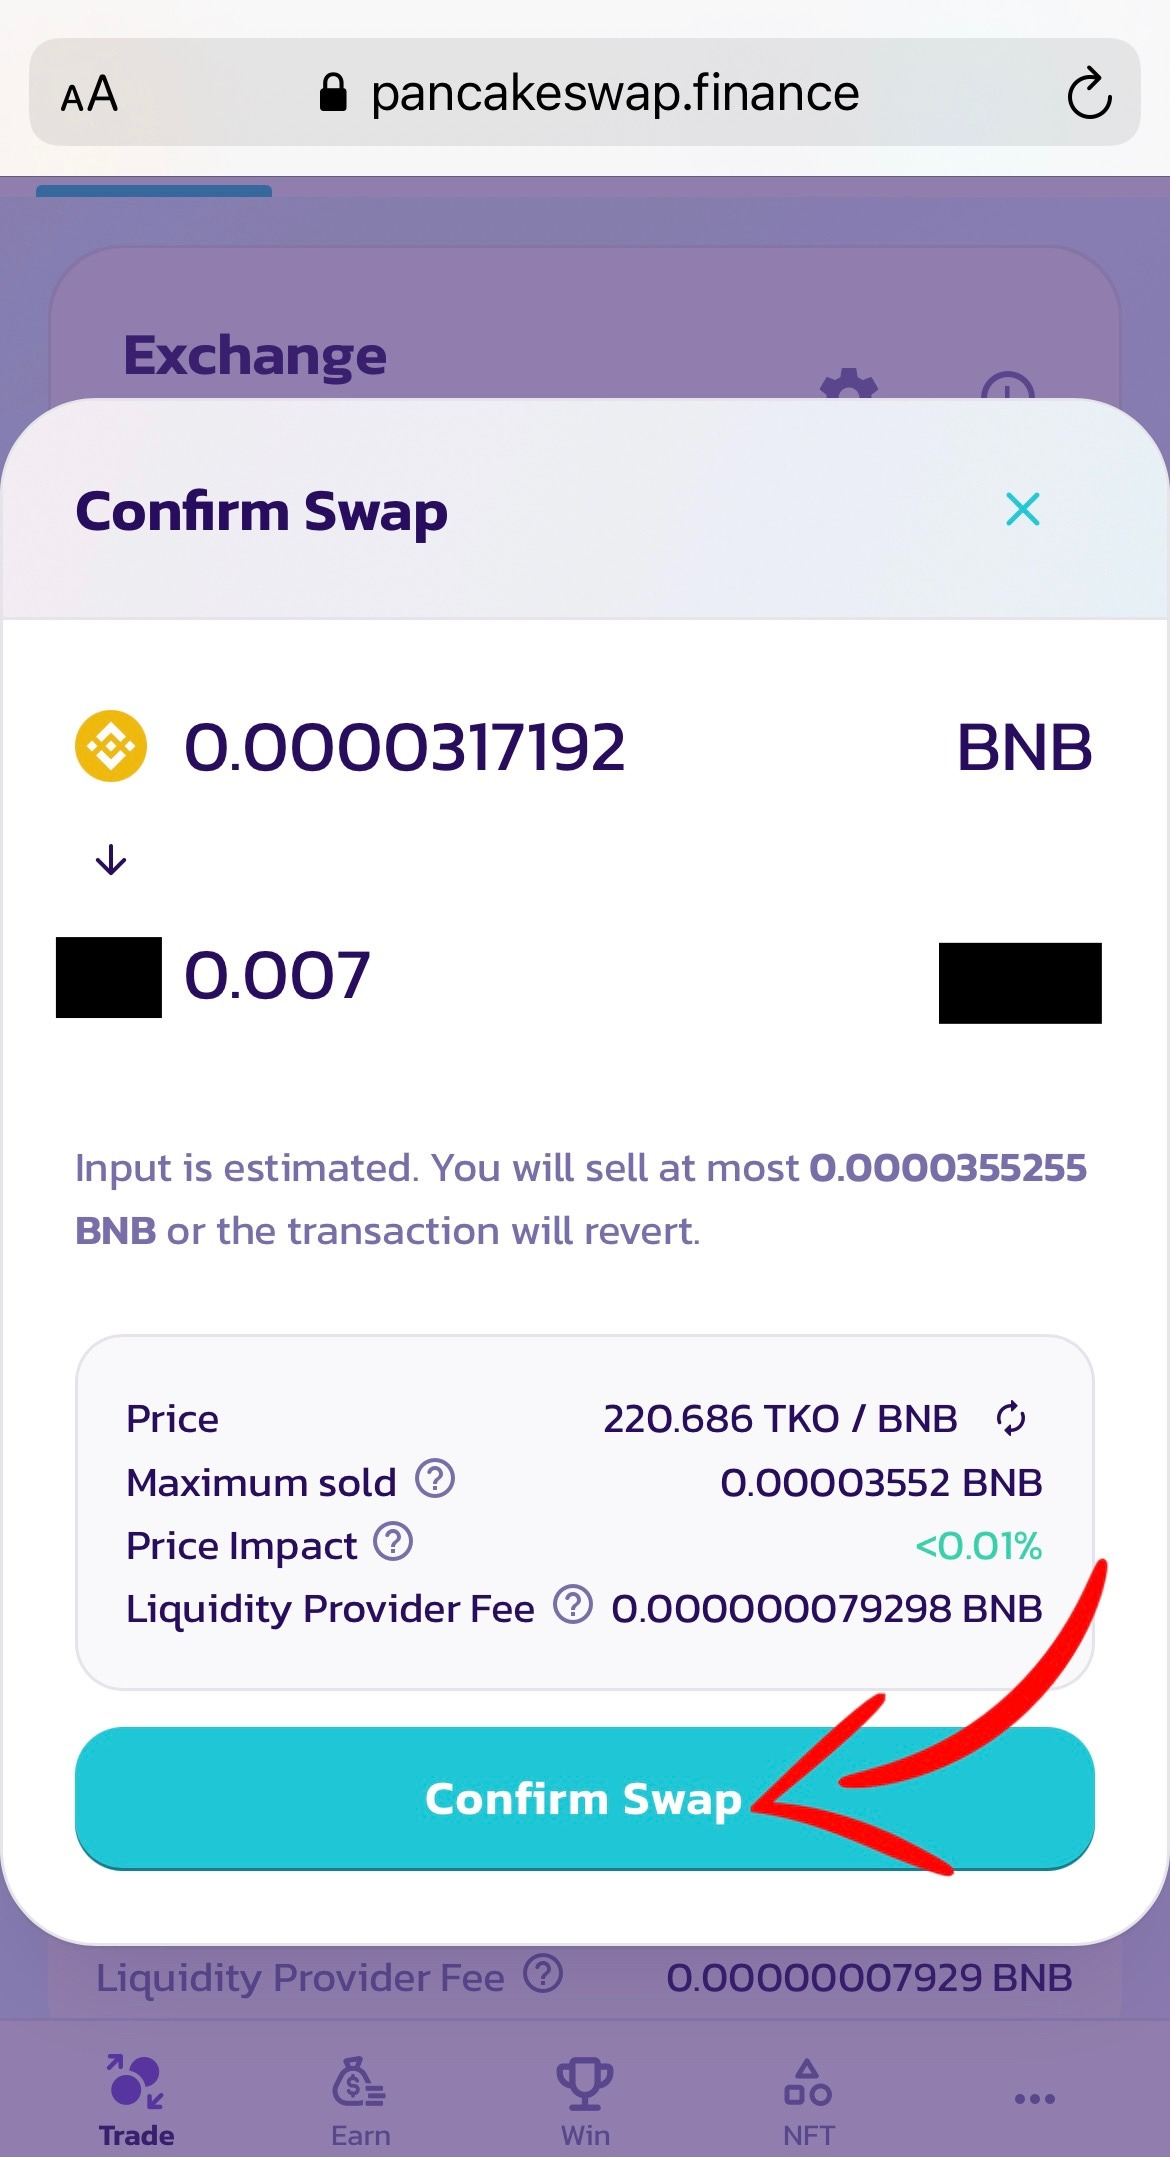 Confirm Swap